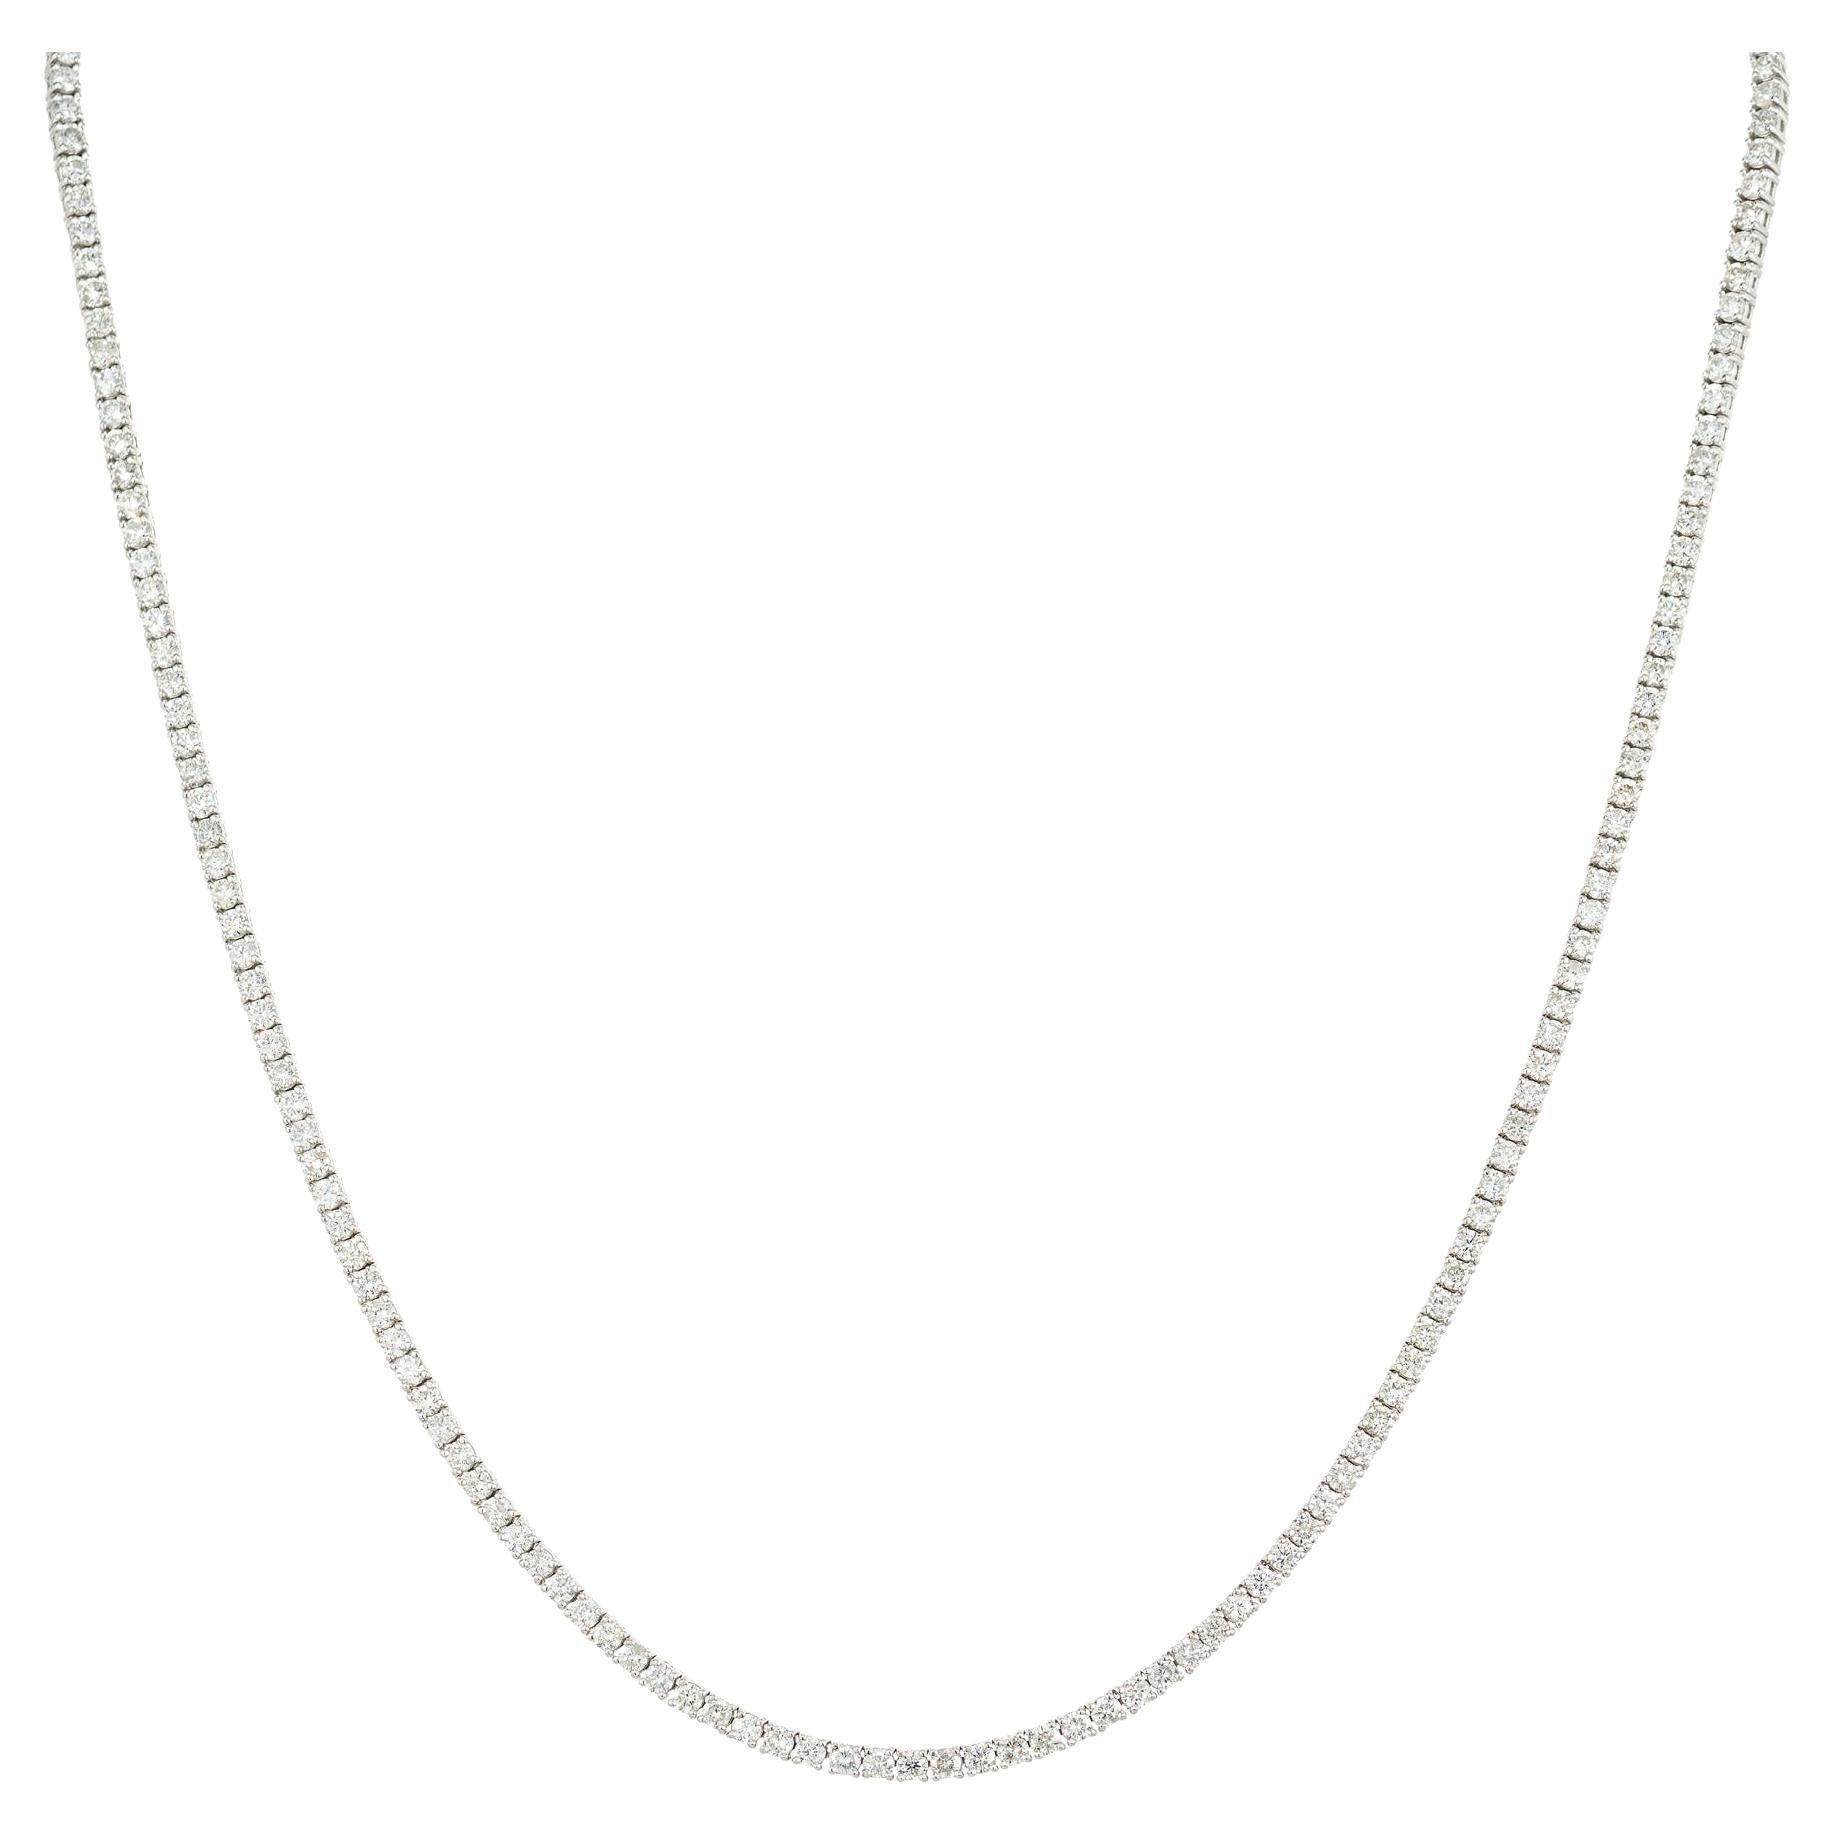 5.50 Carat Diamond White Gold Tennis Necklace